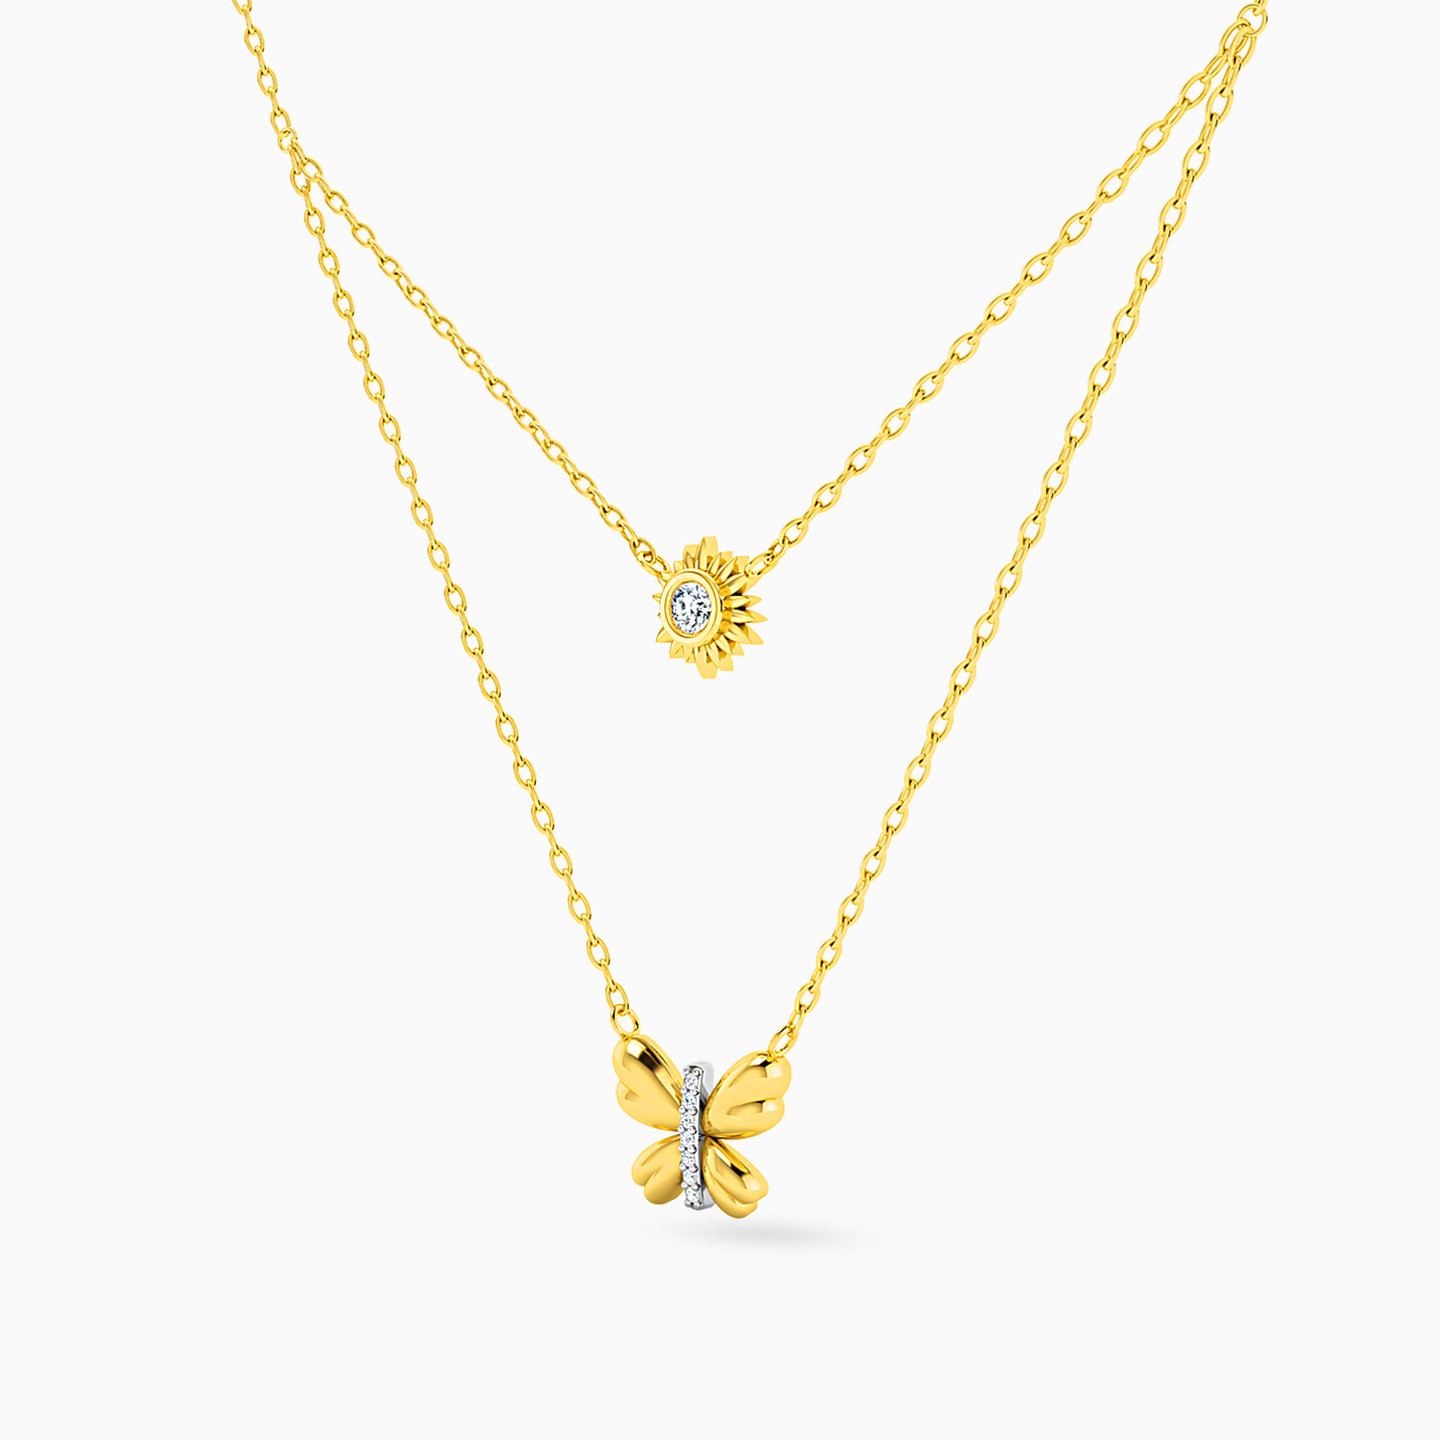 18K Gold Diamond Layered Necklace - 2